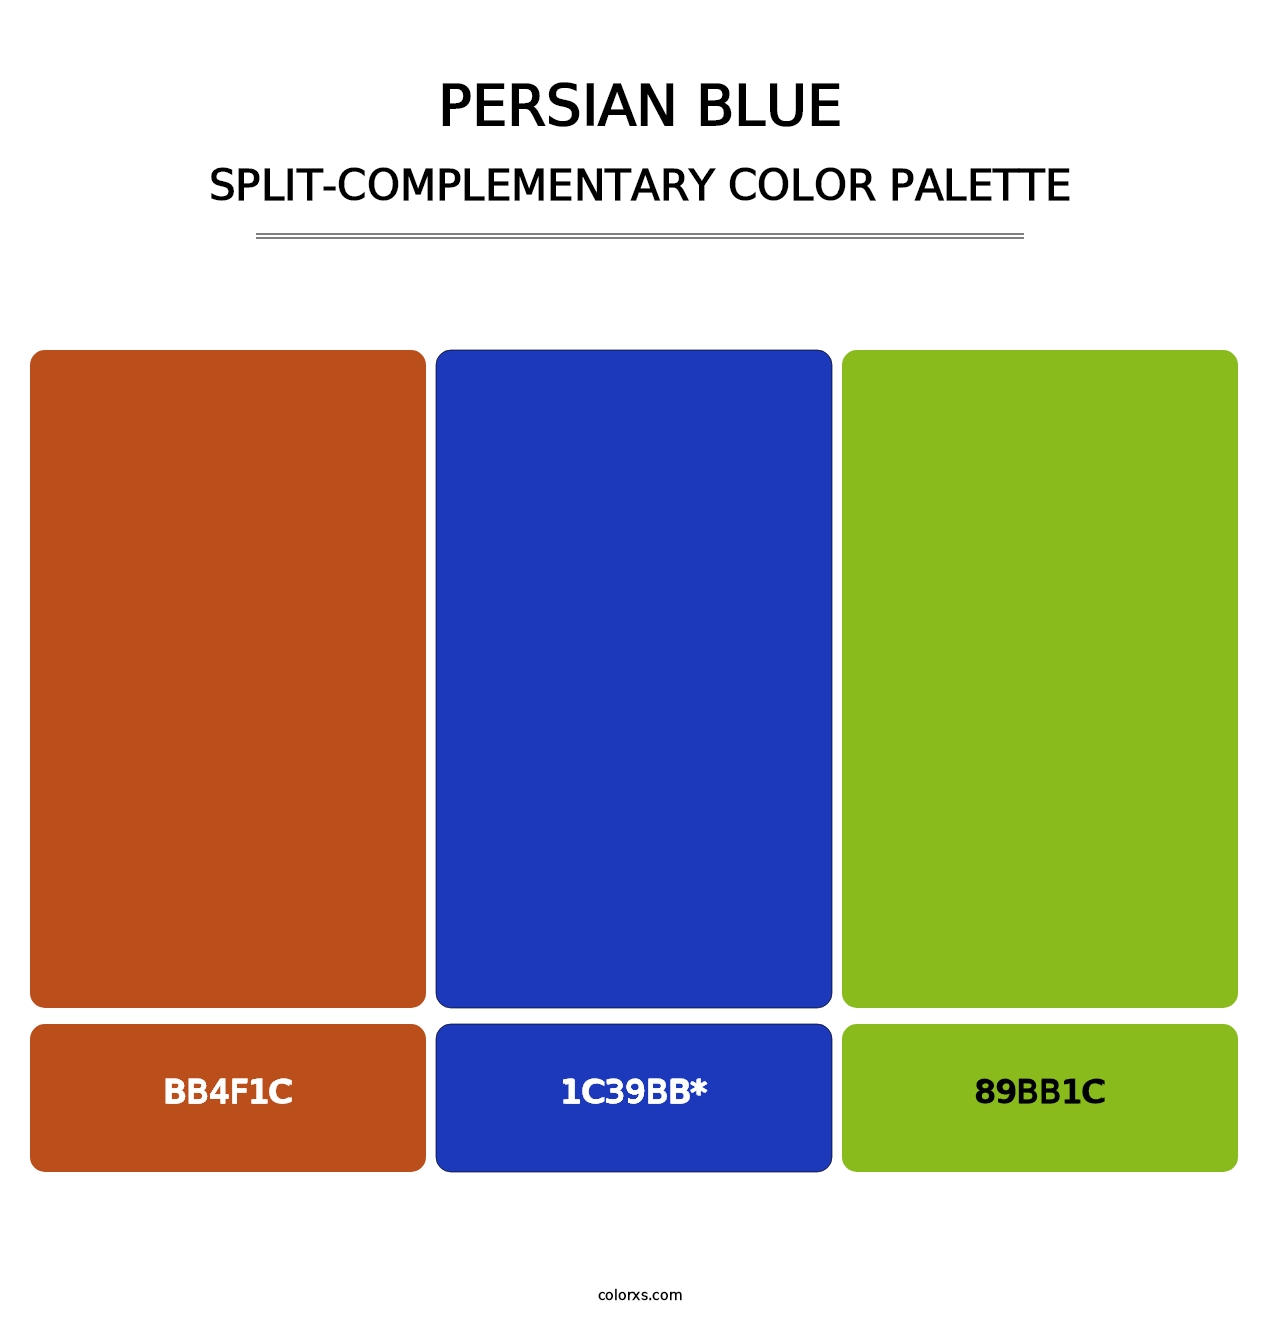 Persian Blue - Split-Complementary Color Palette